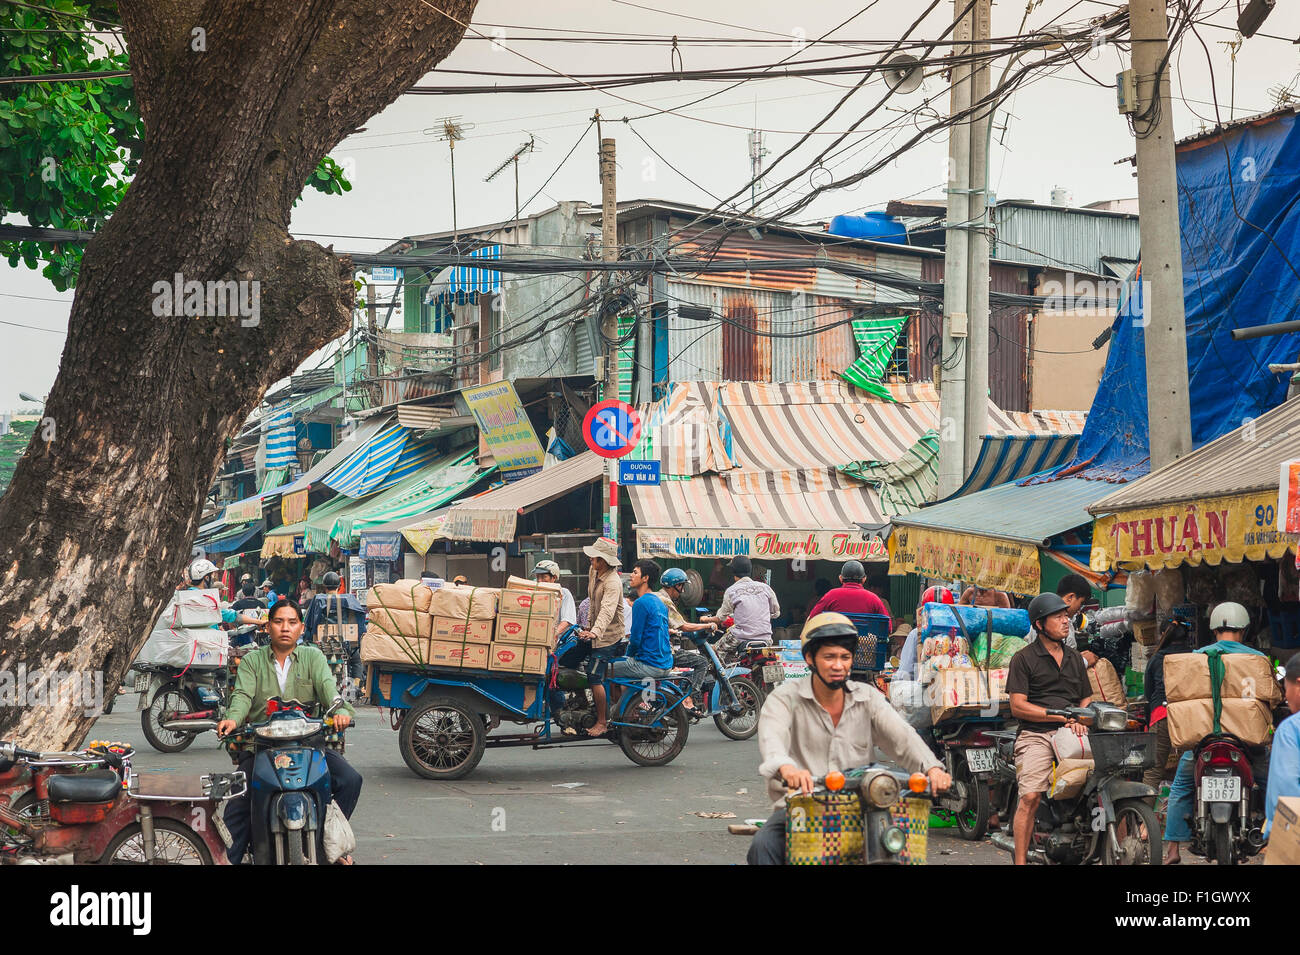 Vietnam street market, a busy street scene in the downtown Cholon area of Ho Chi Minh City, Saigon, Vietnam. Stock Photo